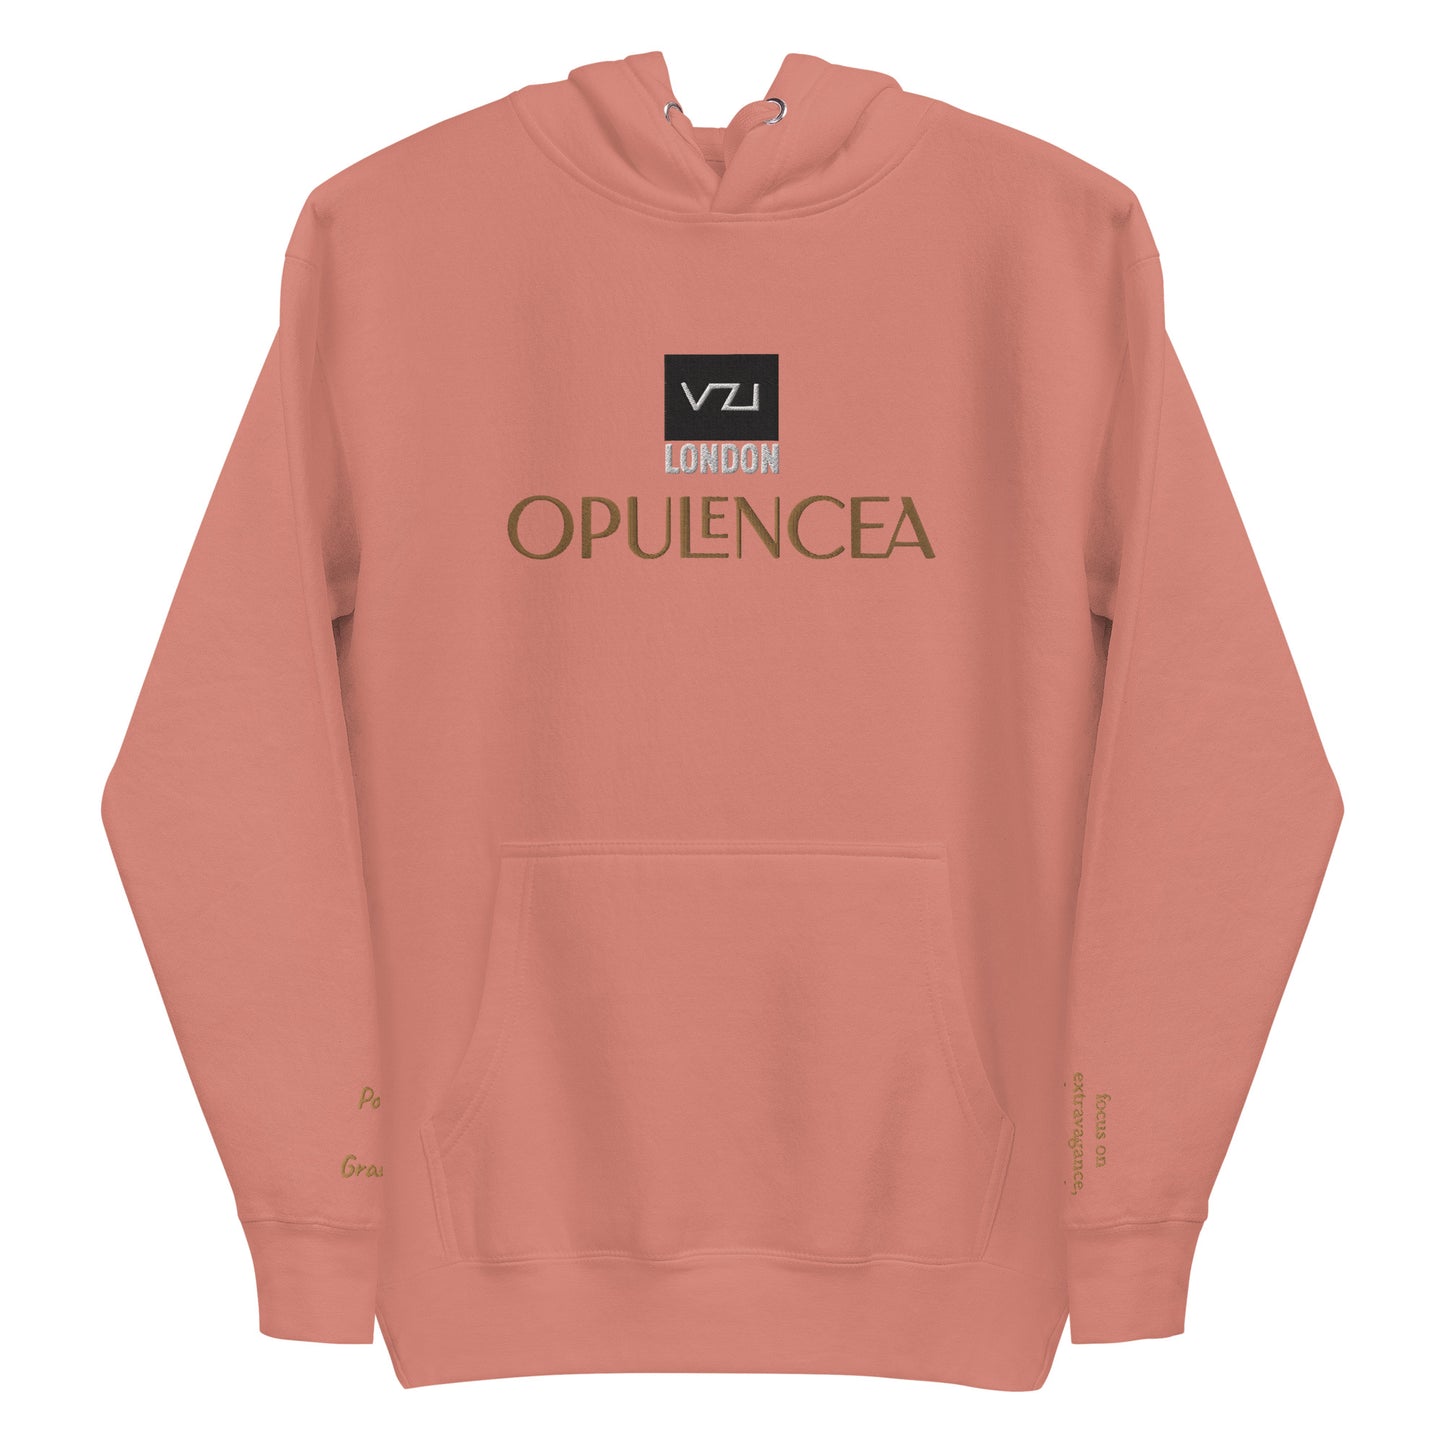 Opulencea: Unisex, Classic Cotton: Fokus auf Extravaganz, Luxus und Genuss (Posh Grandeur)